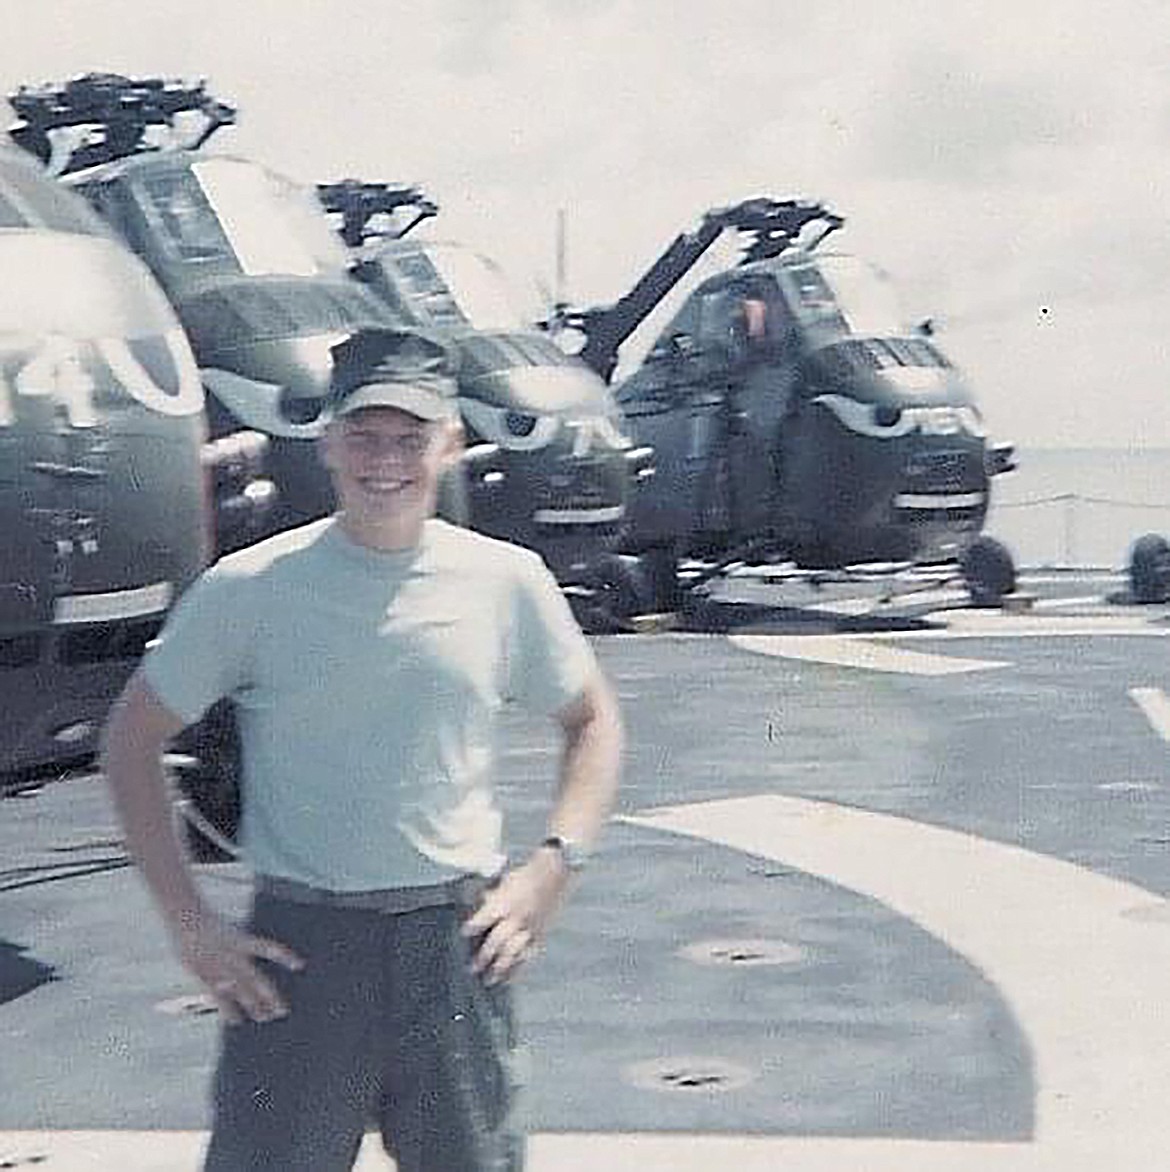 Ray Calhoun as a young Marine during the Vietnam War era.